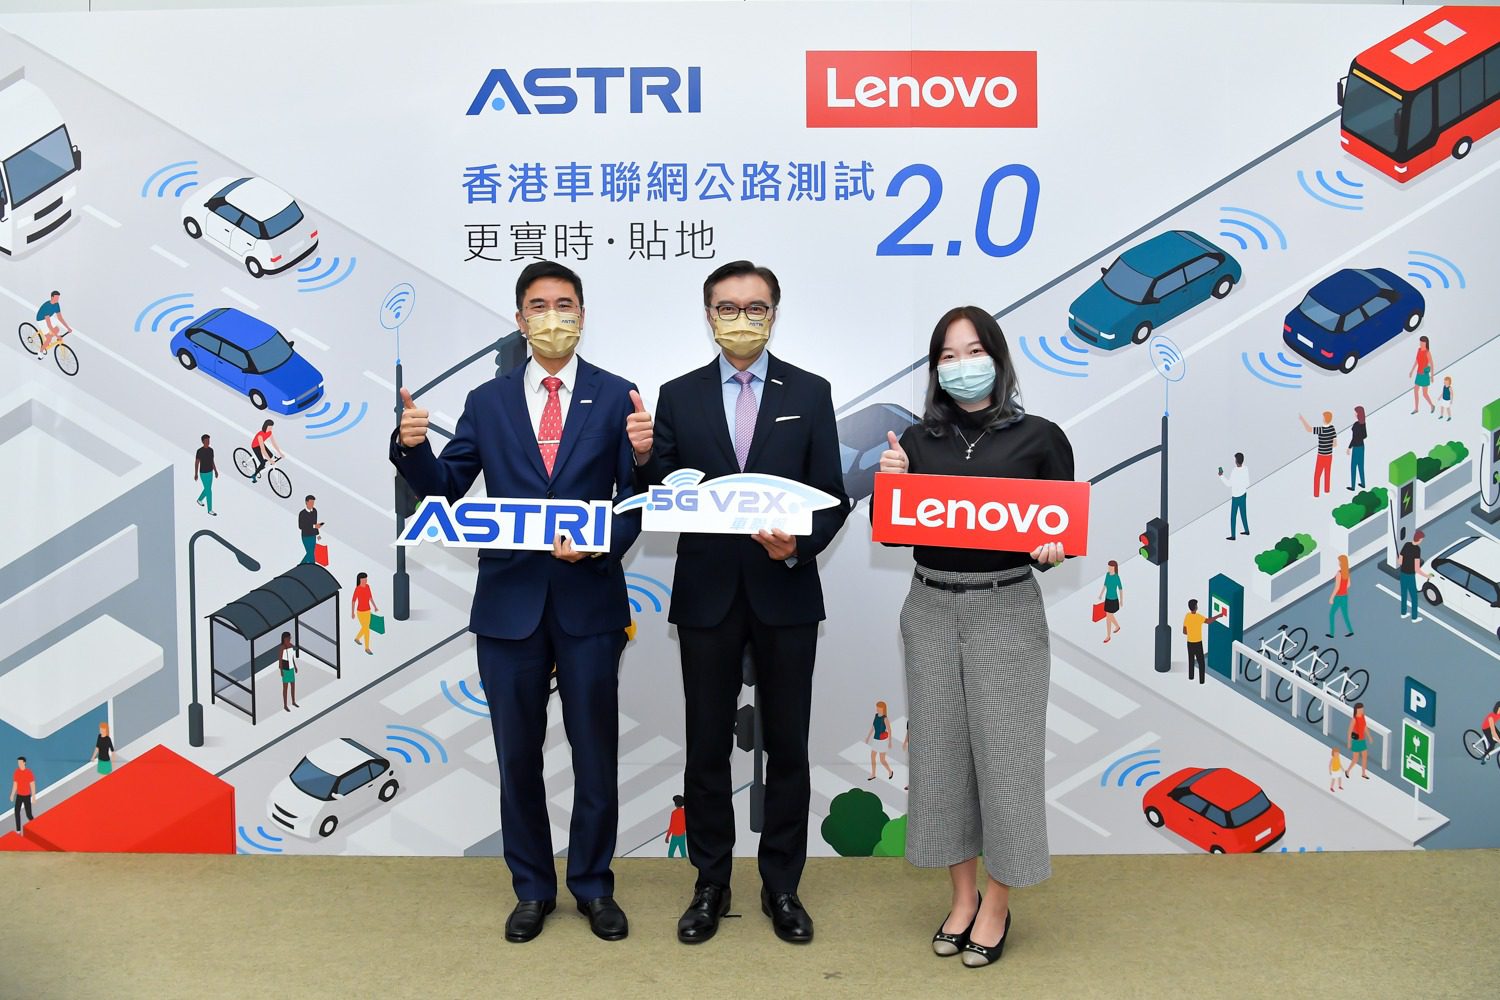 Lenovo and ASTRI representatives standing together